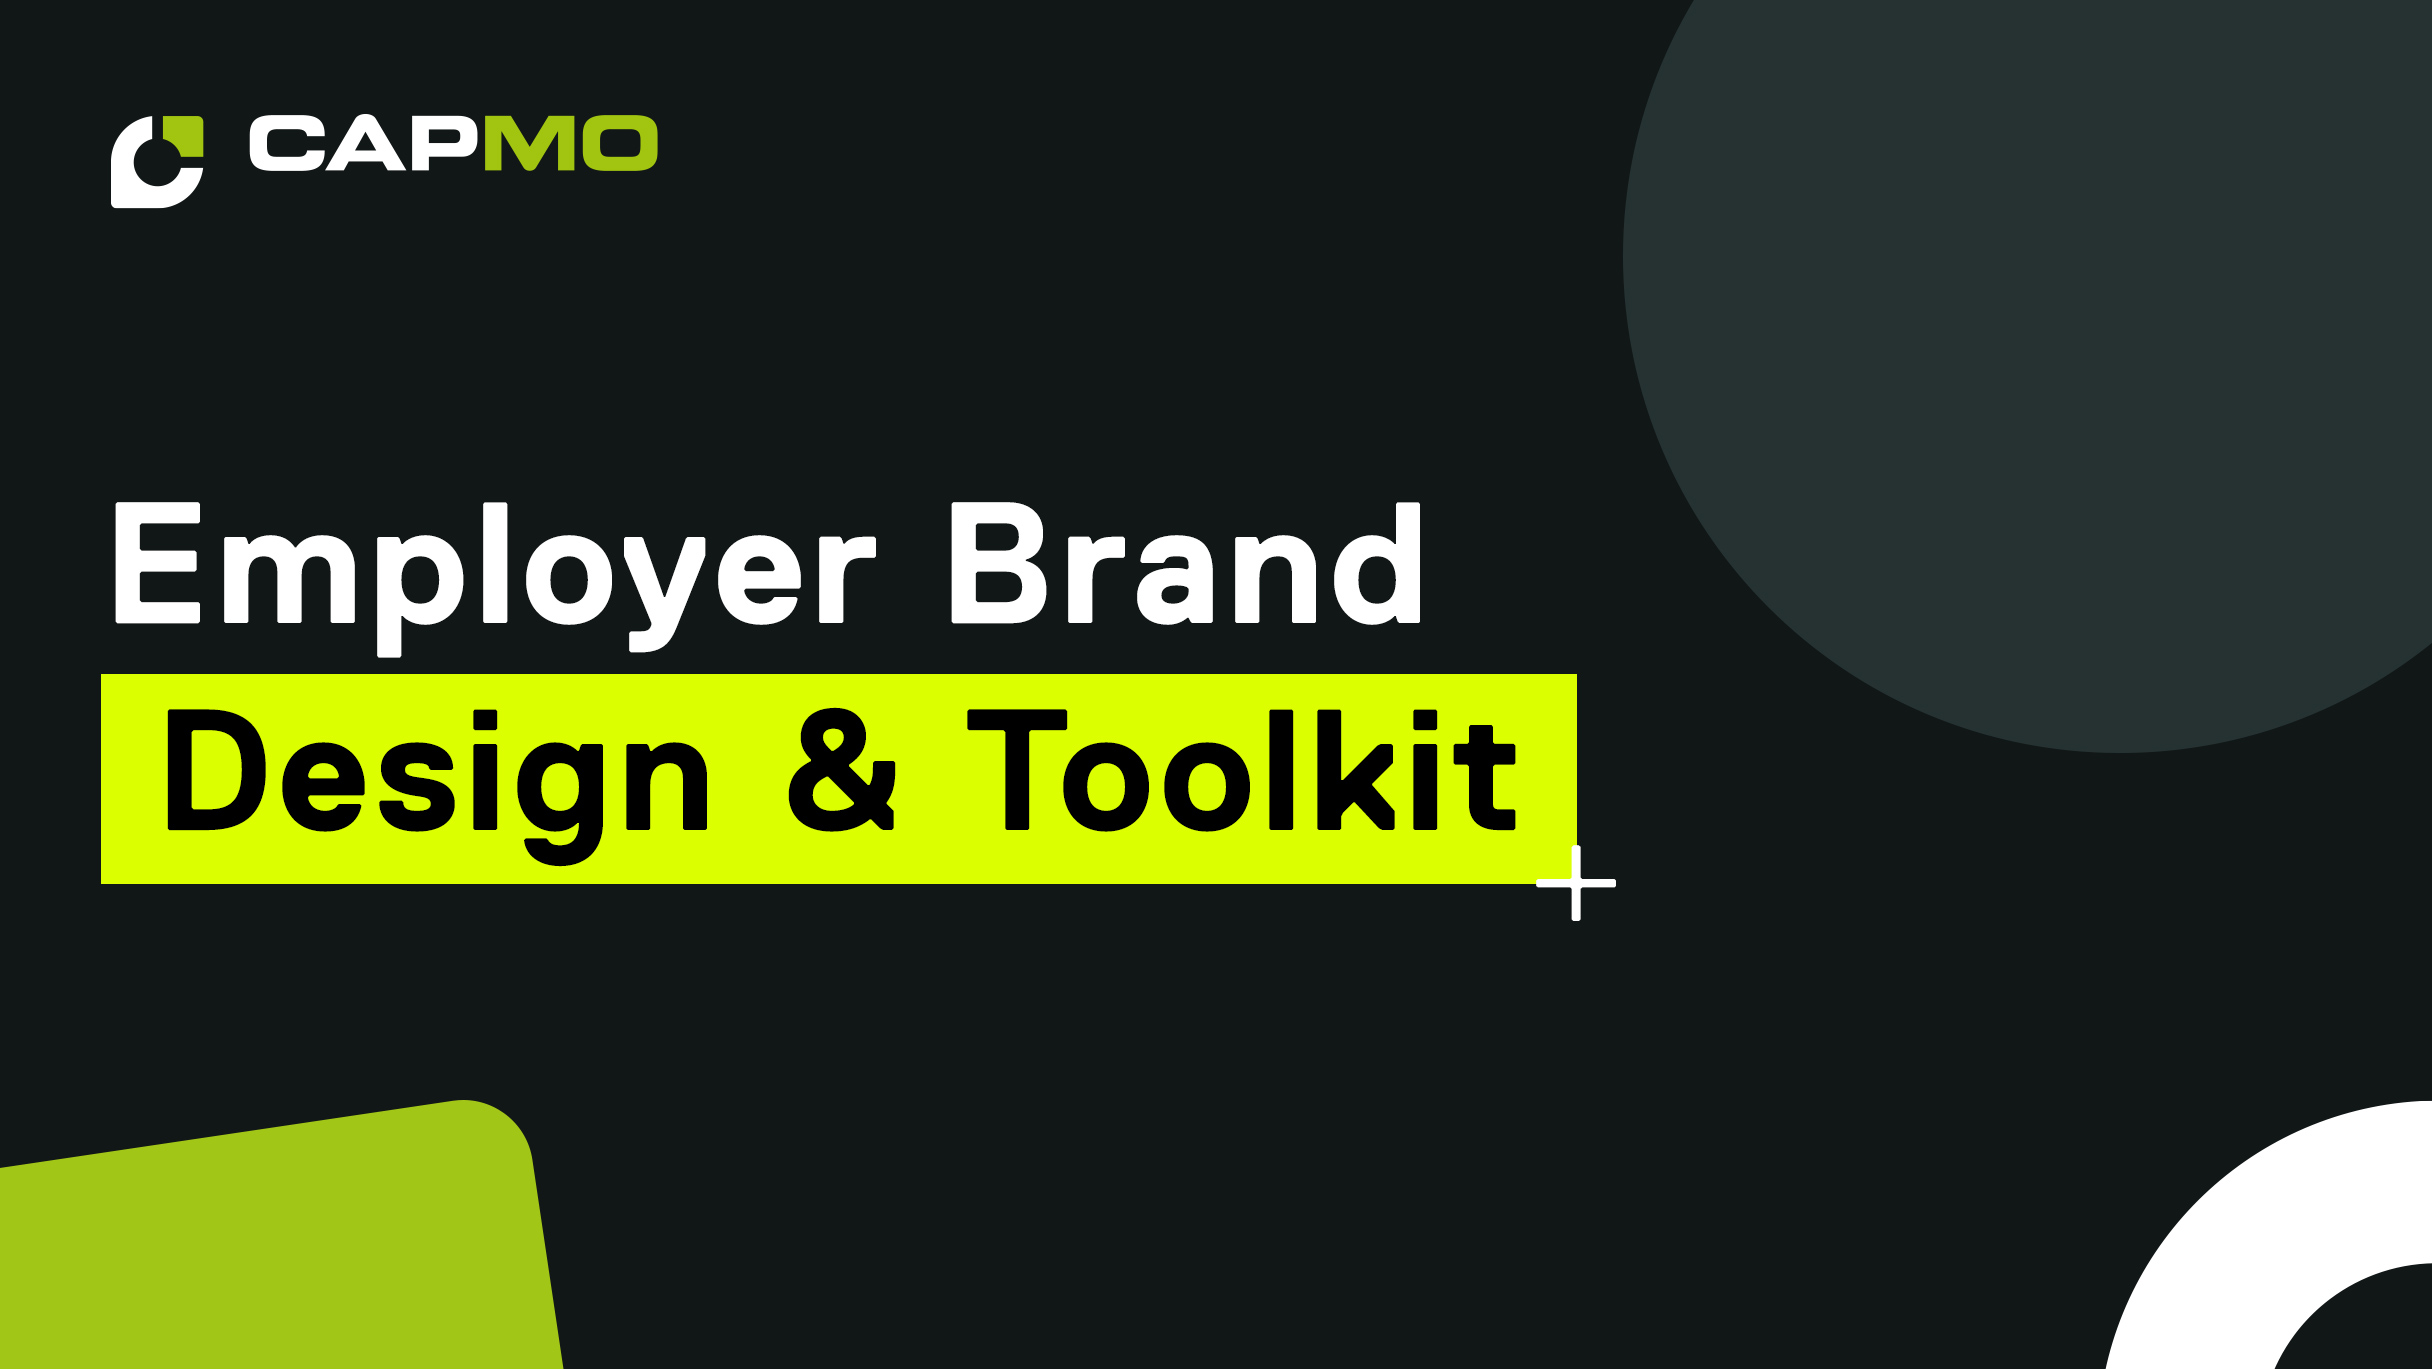 Capmo Employer Brand Design & Toolkit